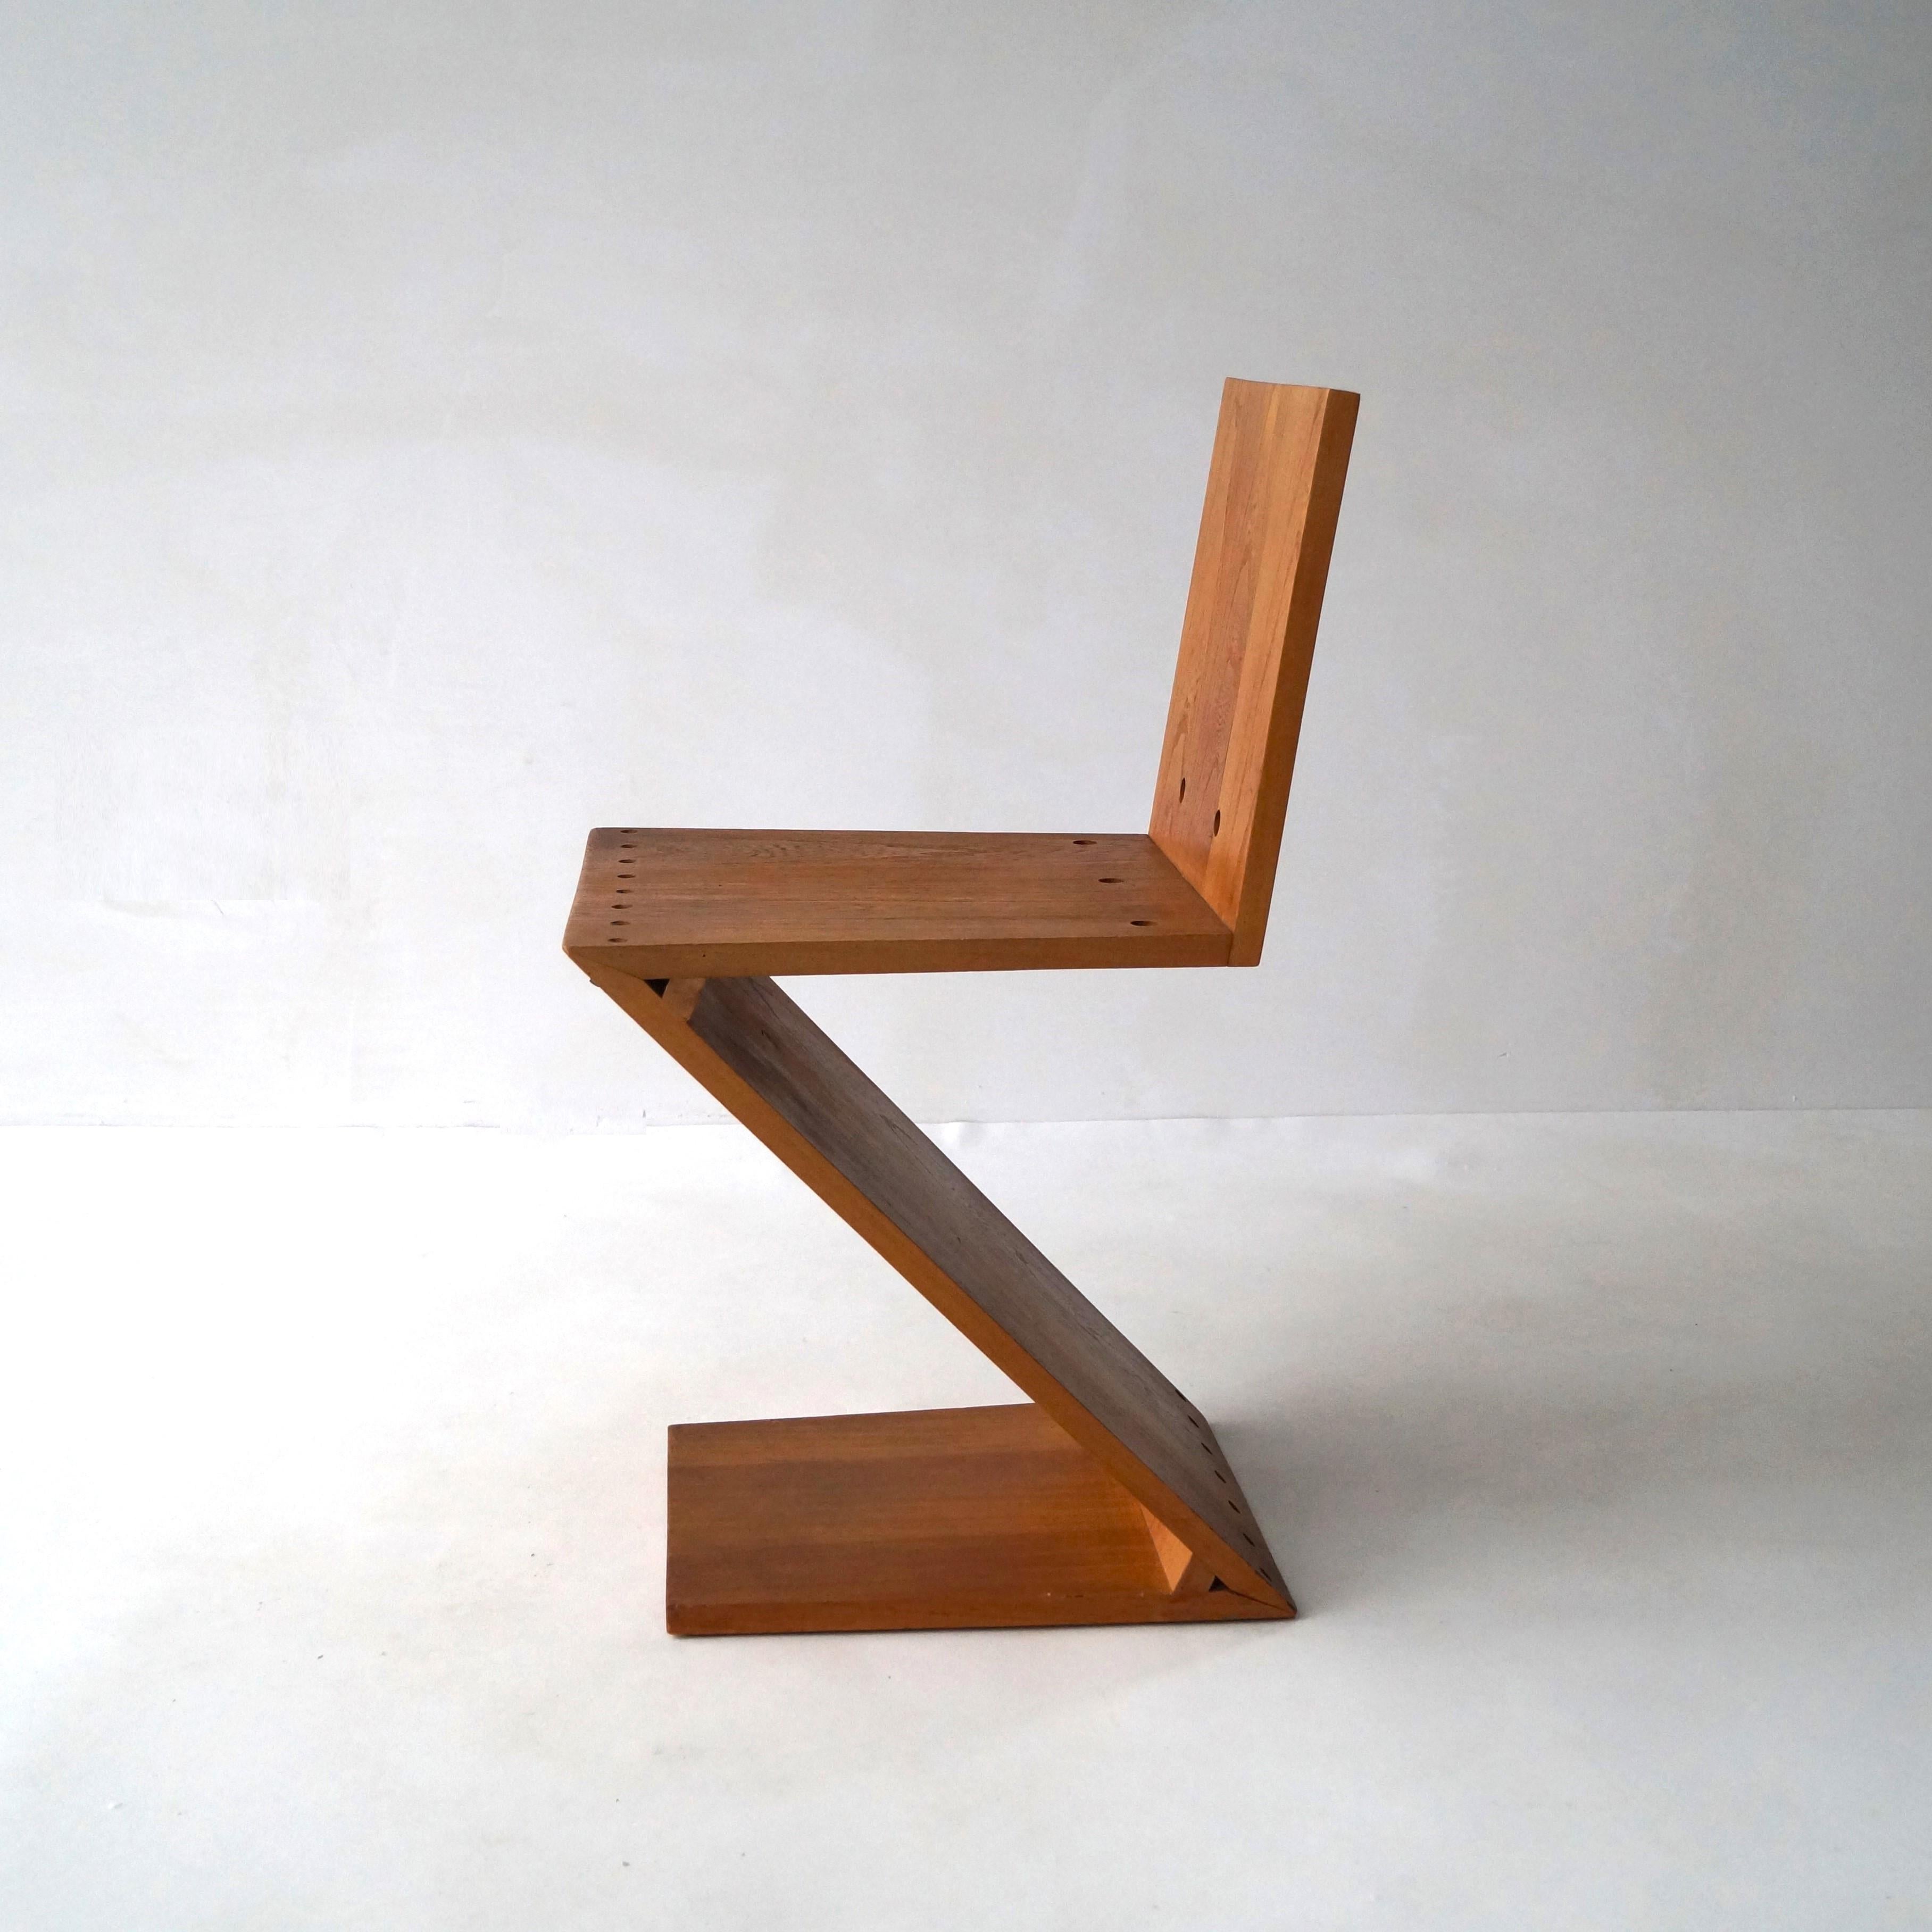 Hand-Crafted Gerrit Rietveld Zig Zag chair by G.A. van de Groenekan, late 1950s